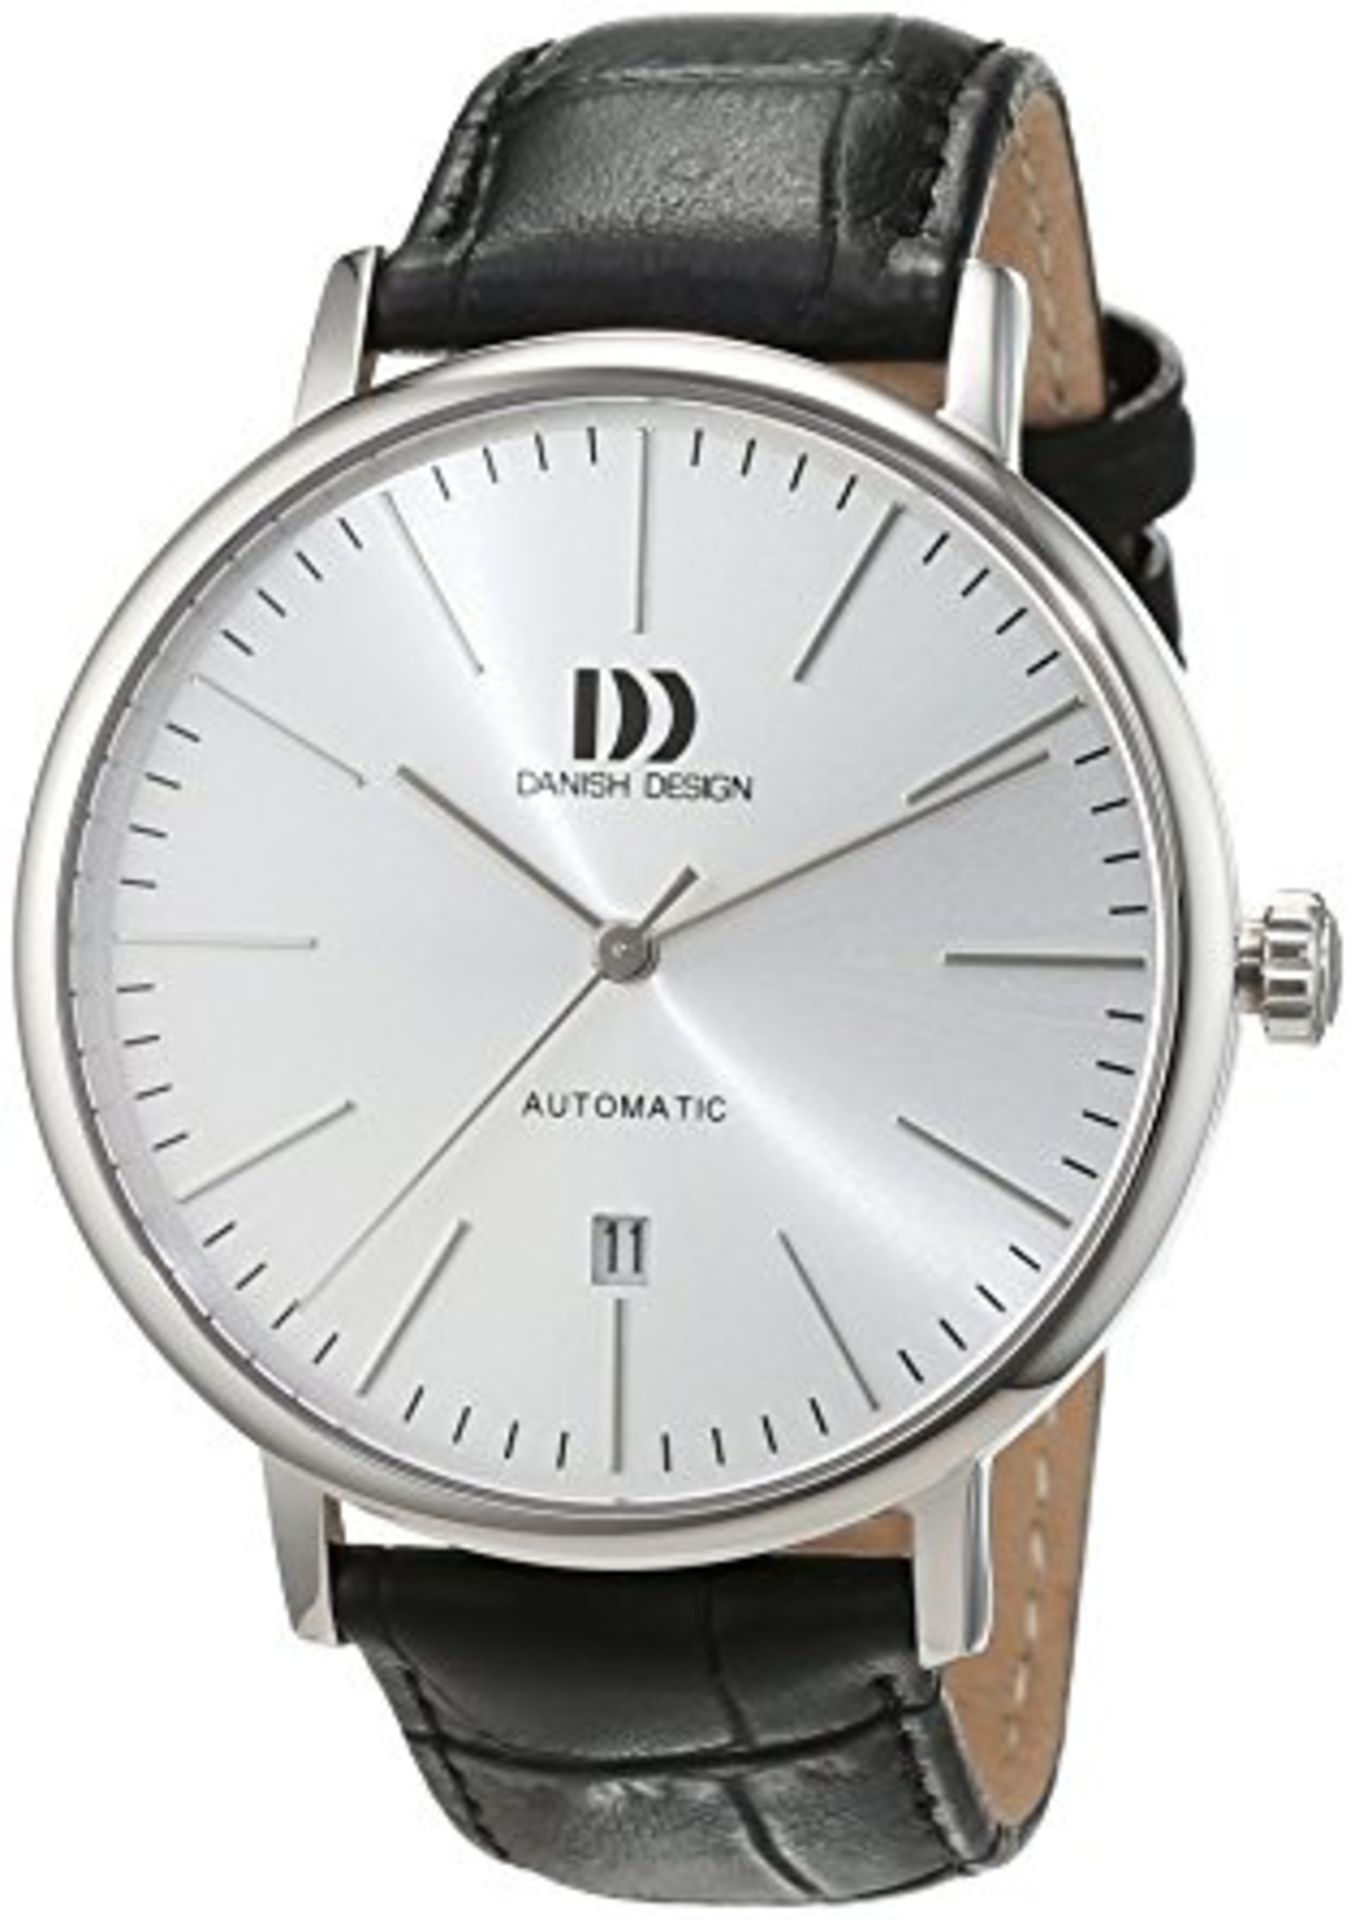 BRAND NEW Danish Design Unisex Automatic Watch Leather Strap IQ12Q1074 RRP £259.99.